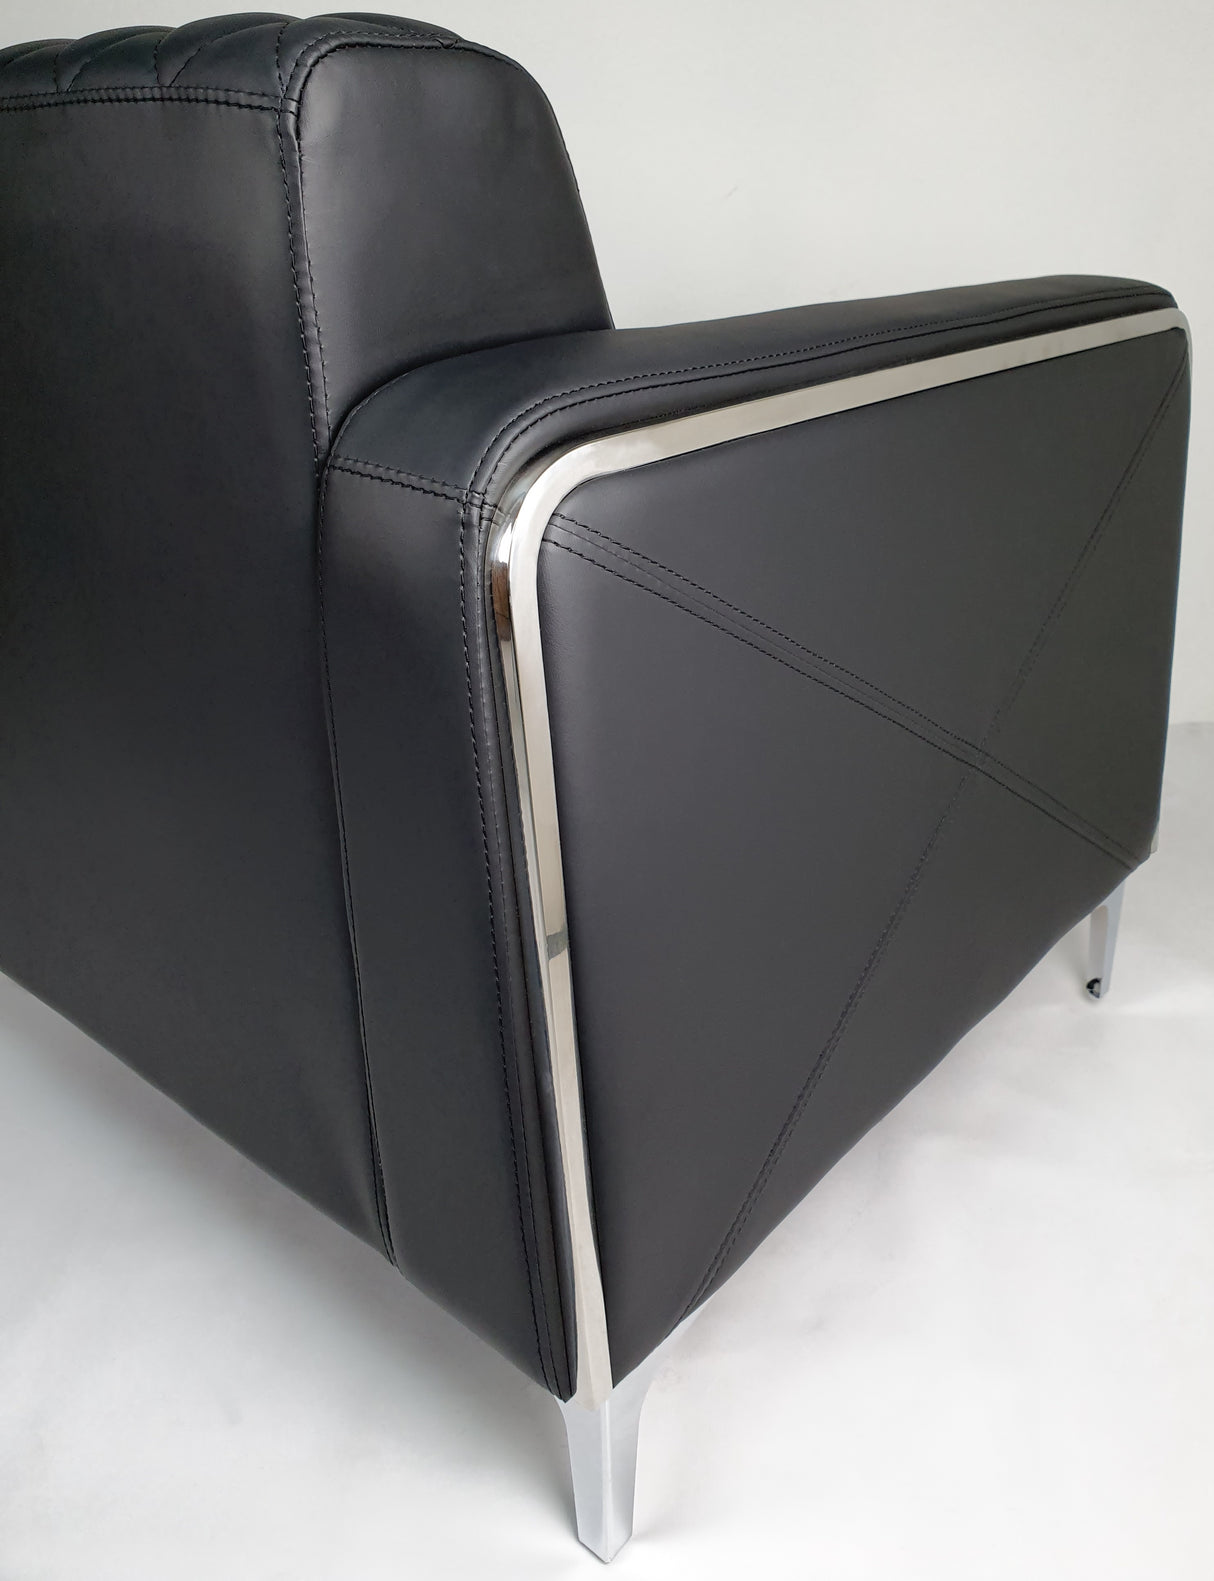 Modern Black Leather Executive Sofa Set - F112